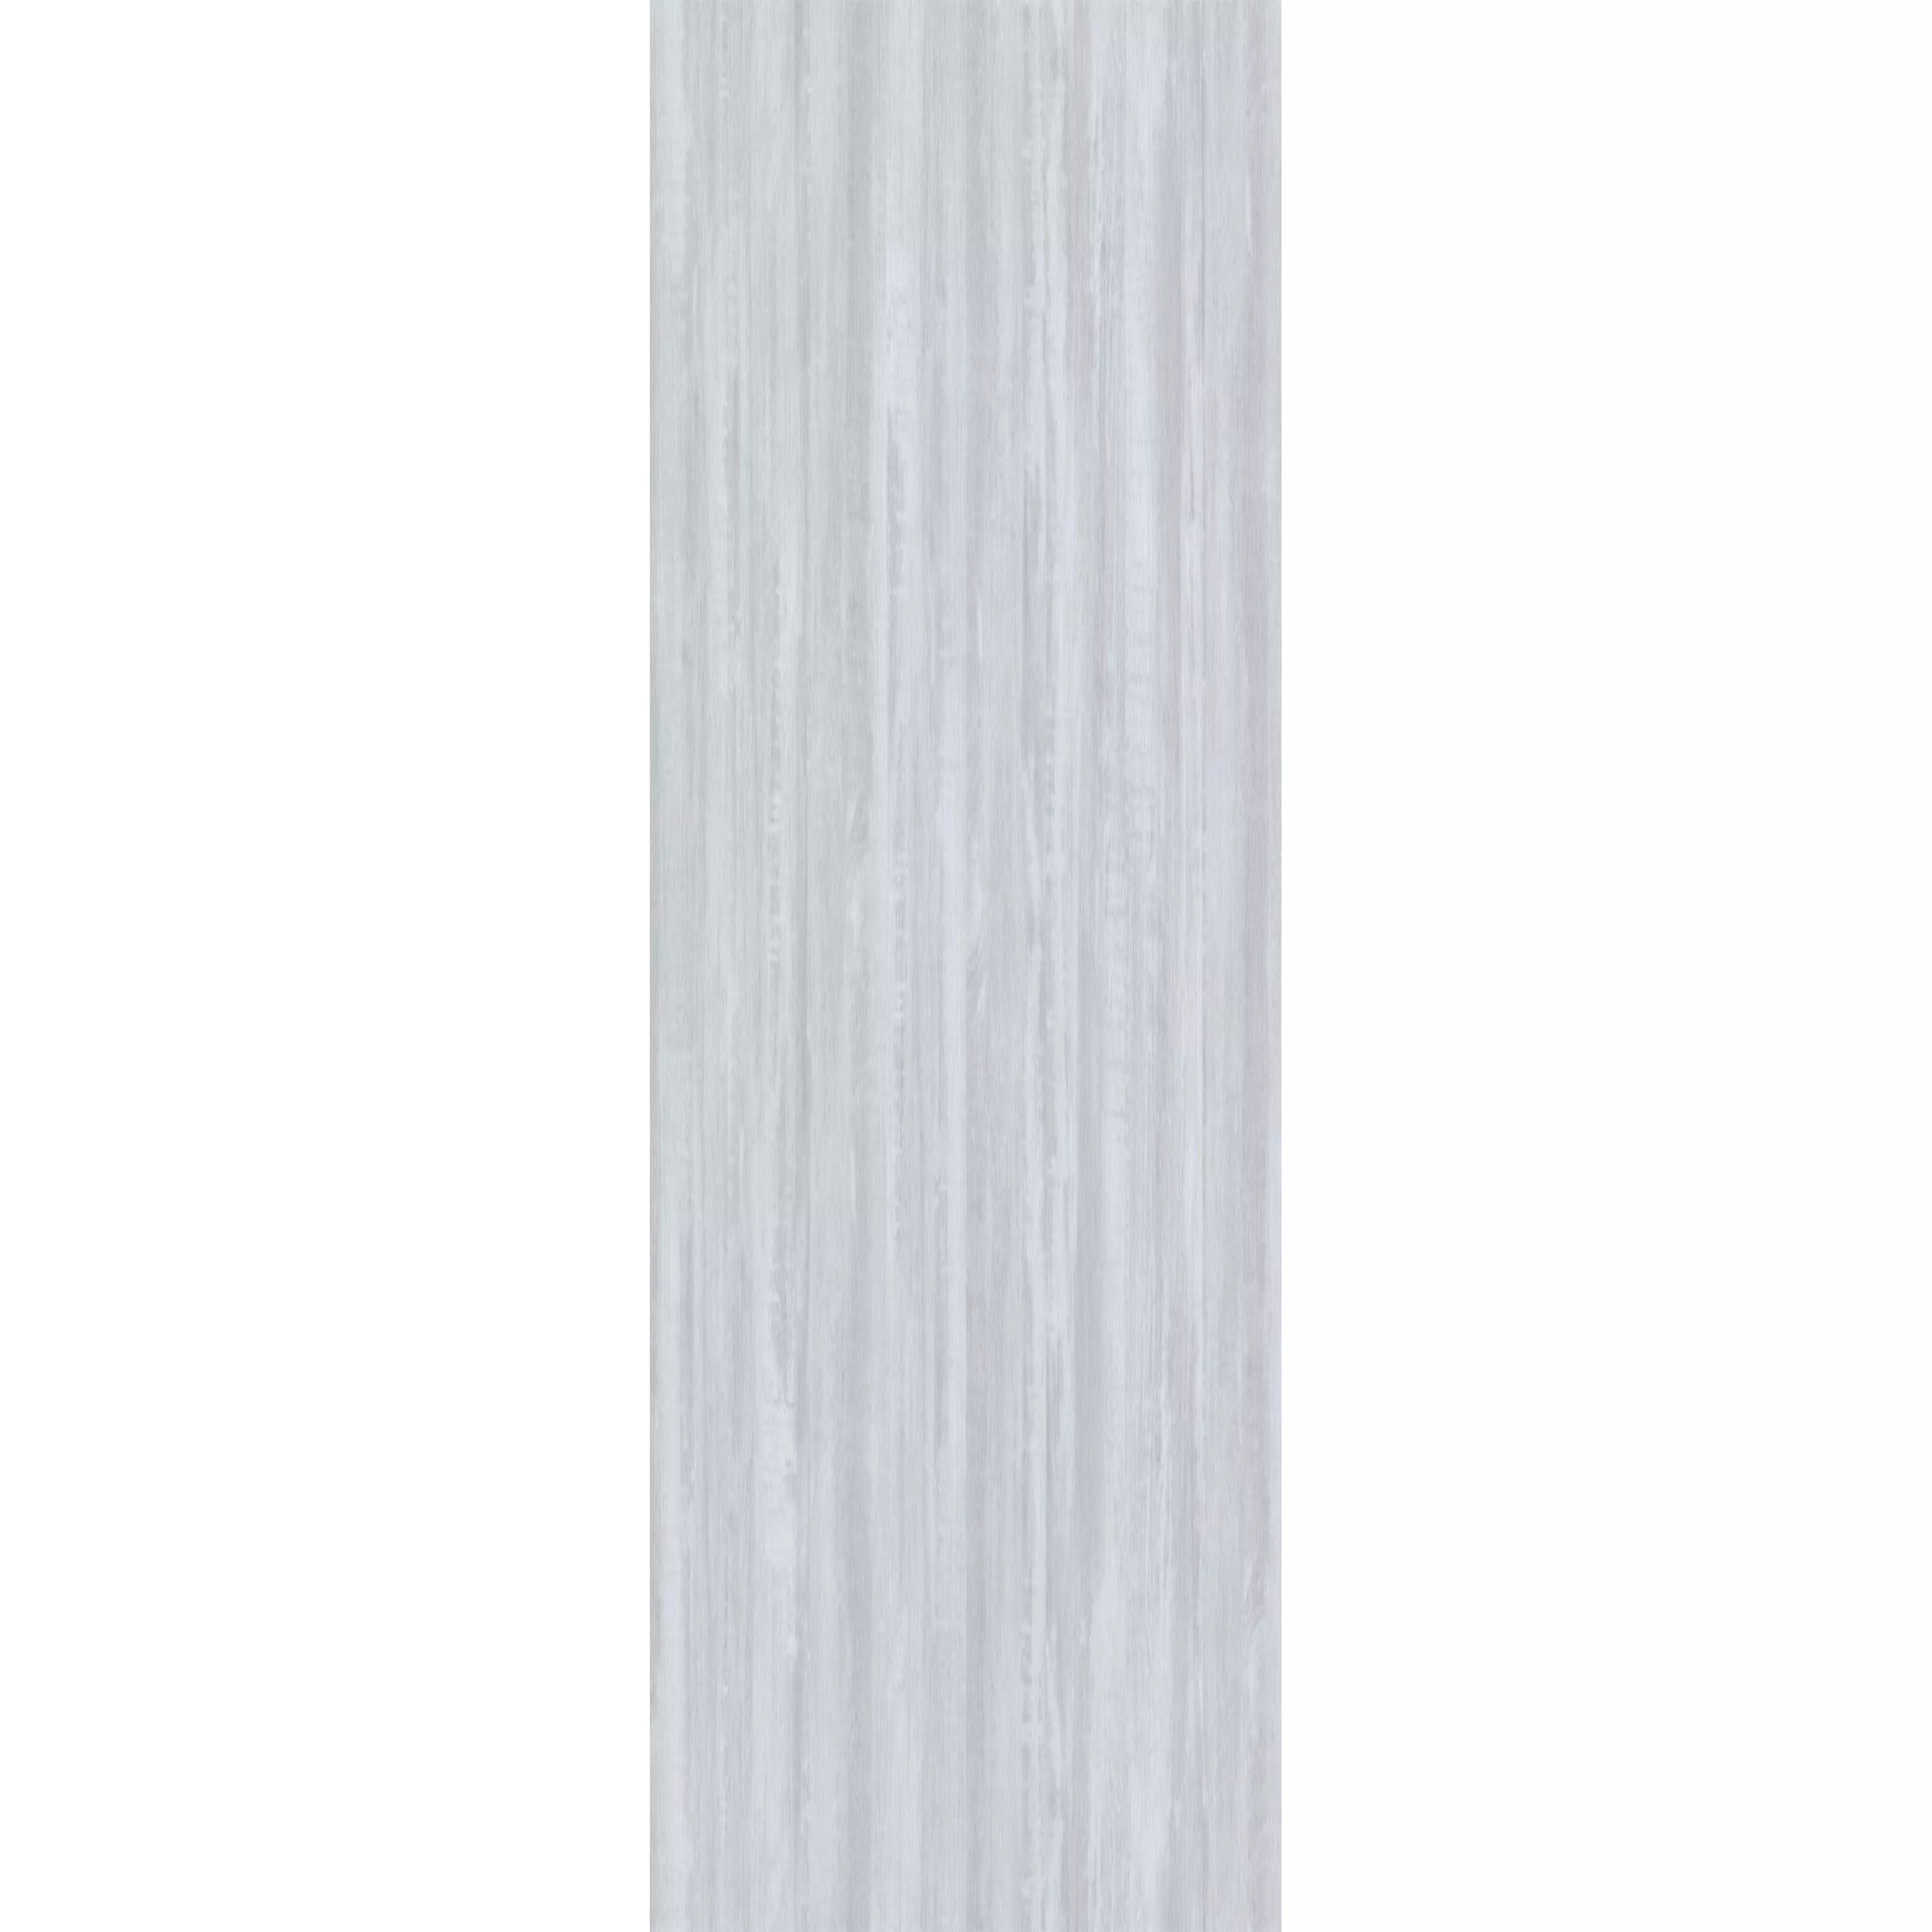 Piastrelle In Vinile Sistema A Clic Snowwood Bianco 17,2x121cm